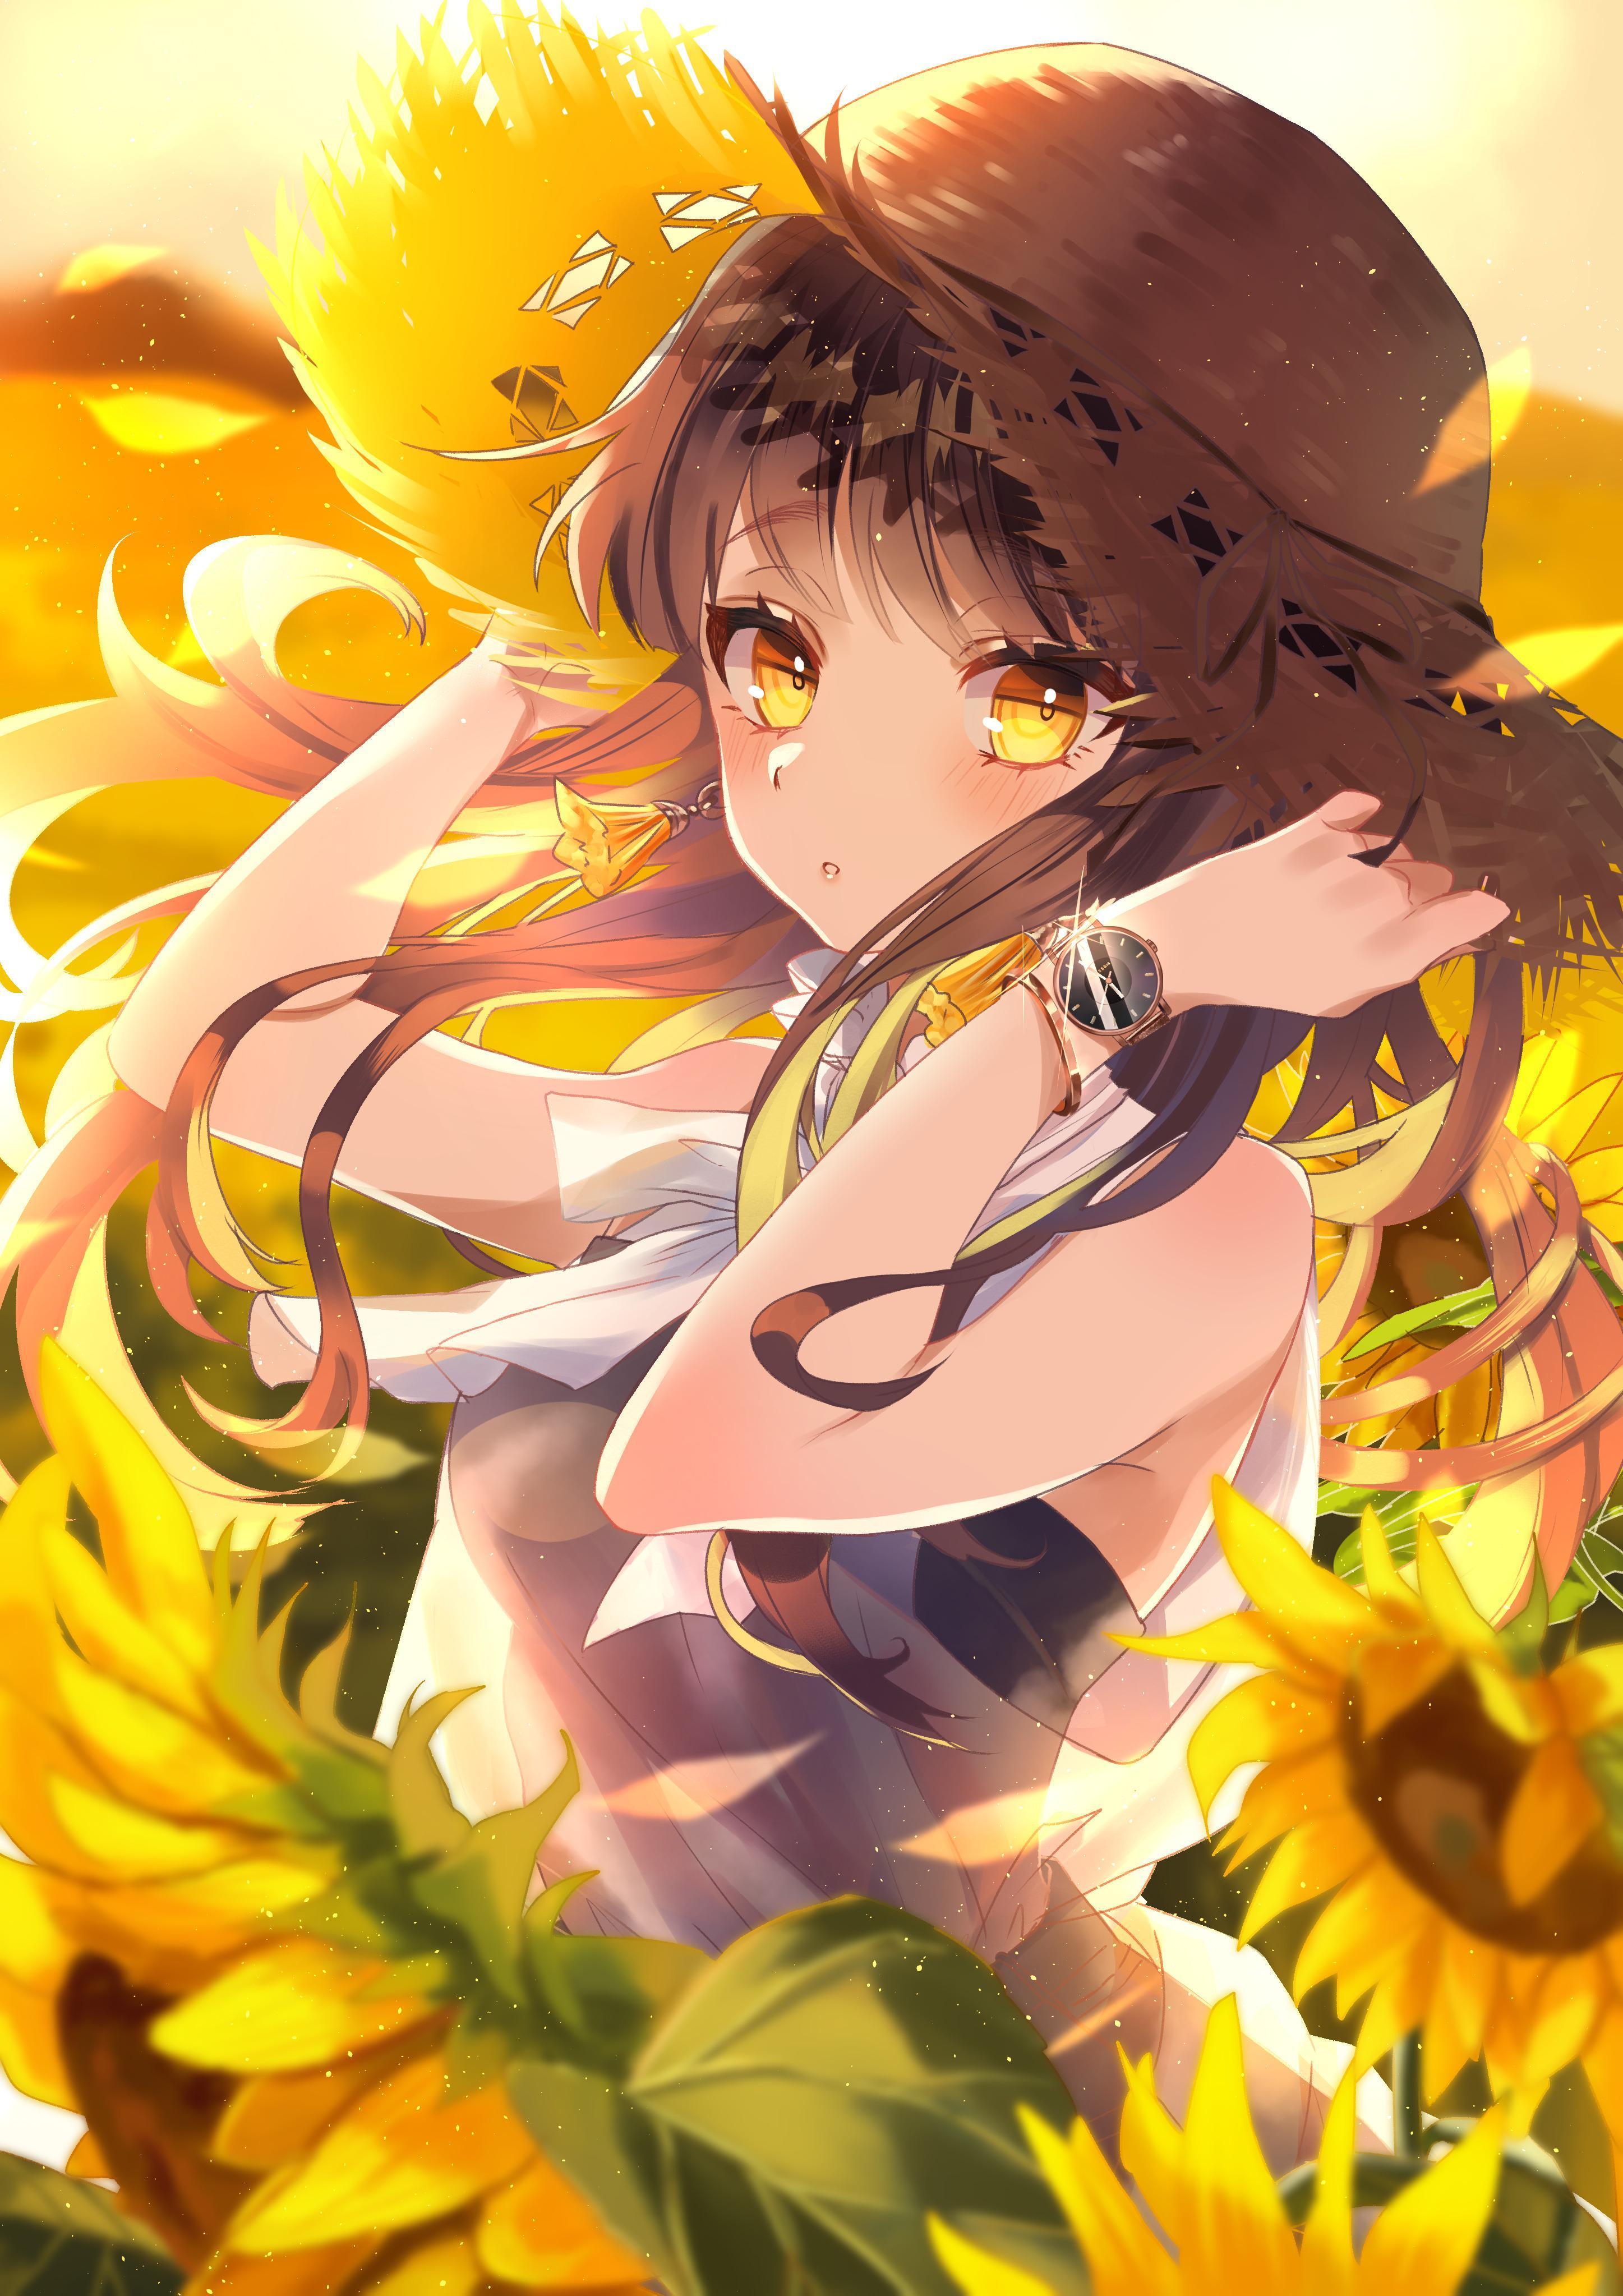 HD wallpaper, Original Characters, Yellow Eyes, Flowers, Anime, Brunette, Long Hair, Anime Girls, Straw Hat, Wristwatch, Sunflowers